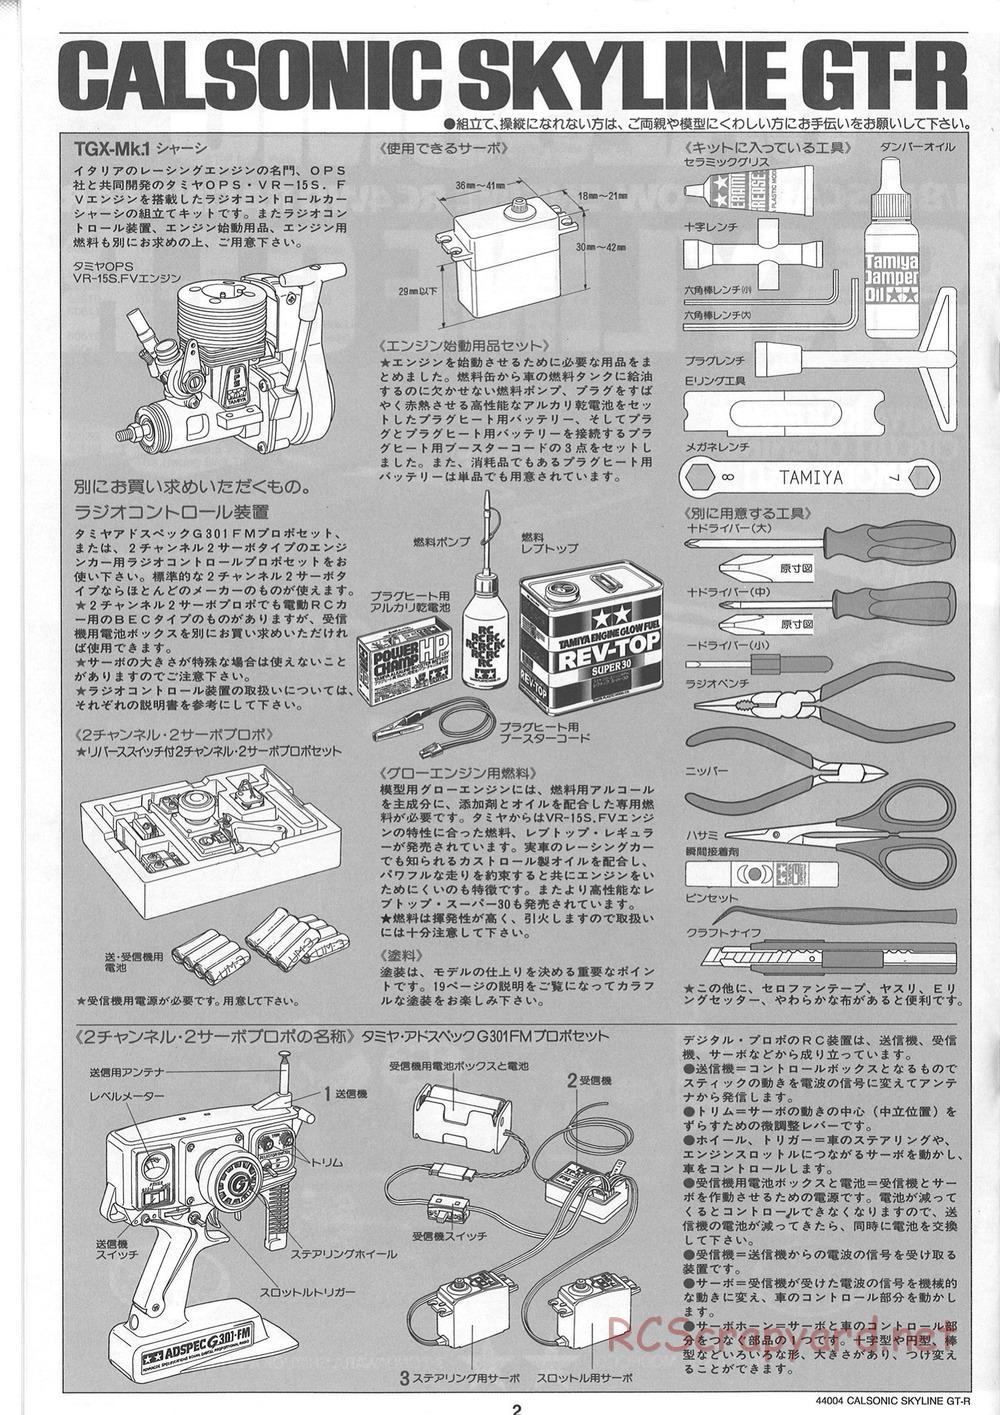 Tamiya - Calsonic GT-R - TGX Mk.1 Chassis - Manual - Page 2